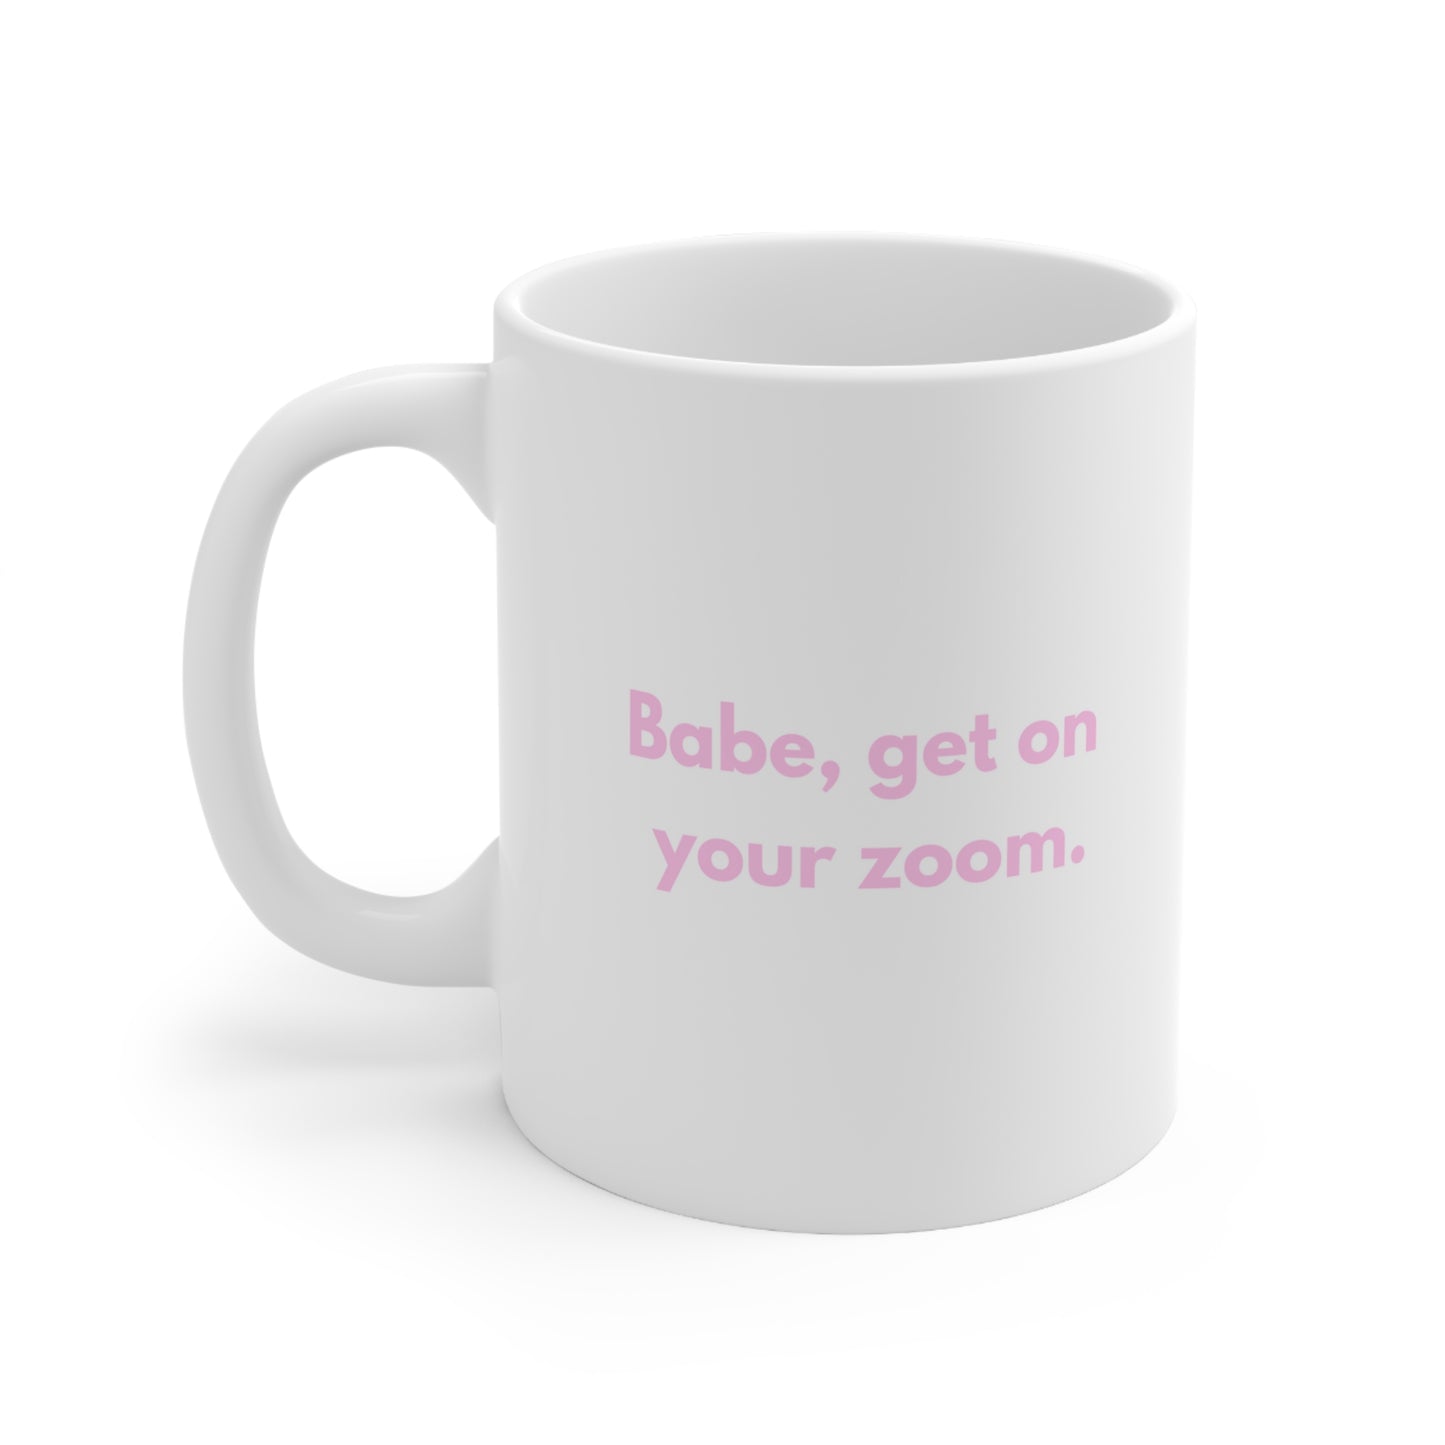 "Babe, get on your zoom" Coffee Mug